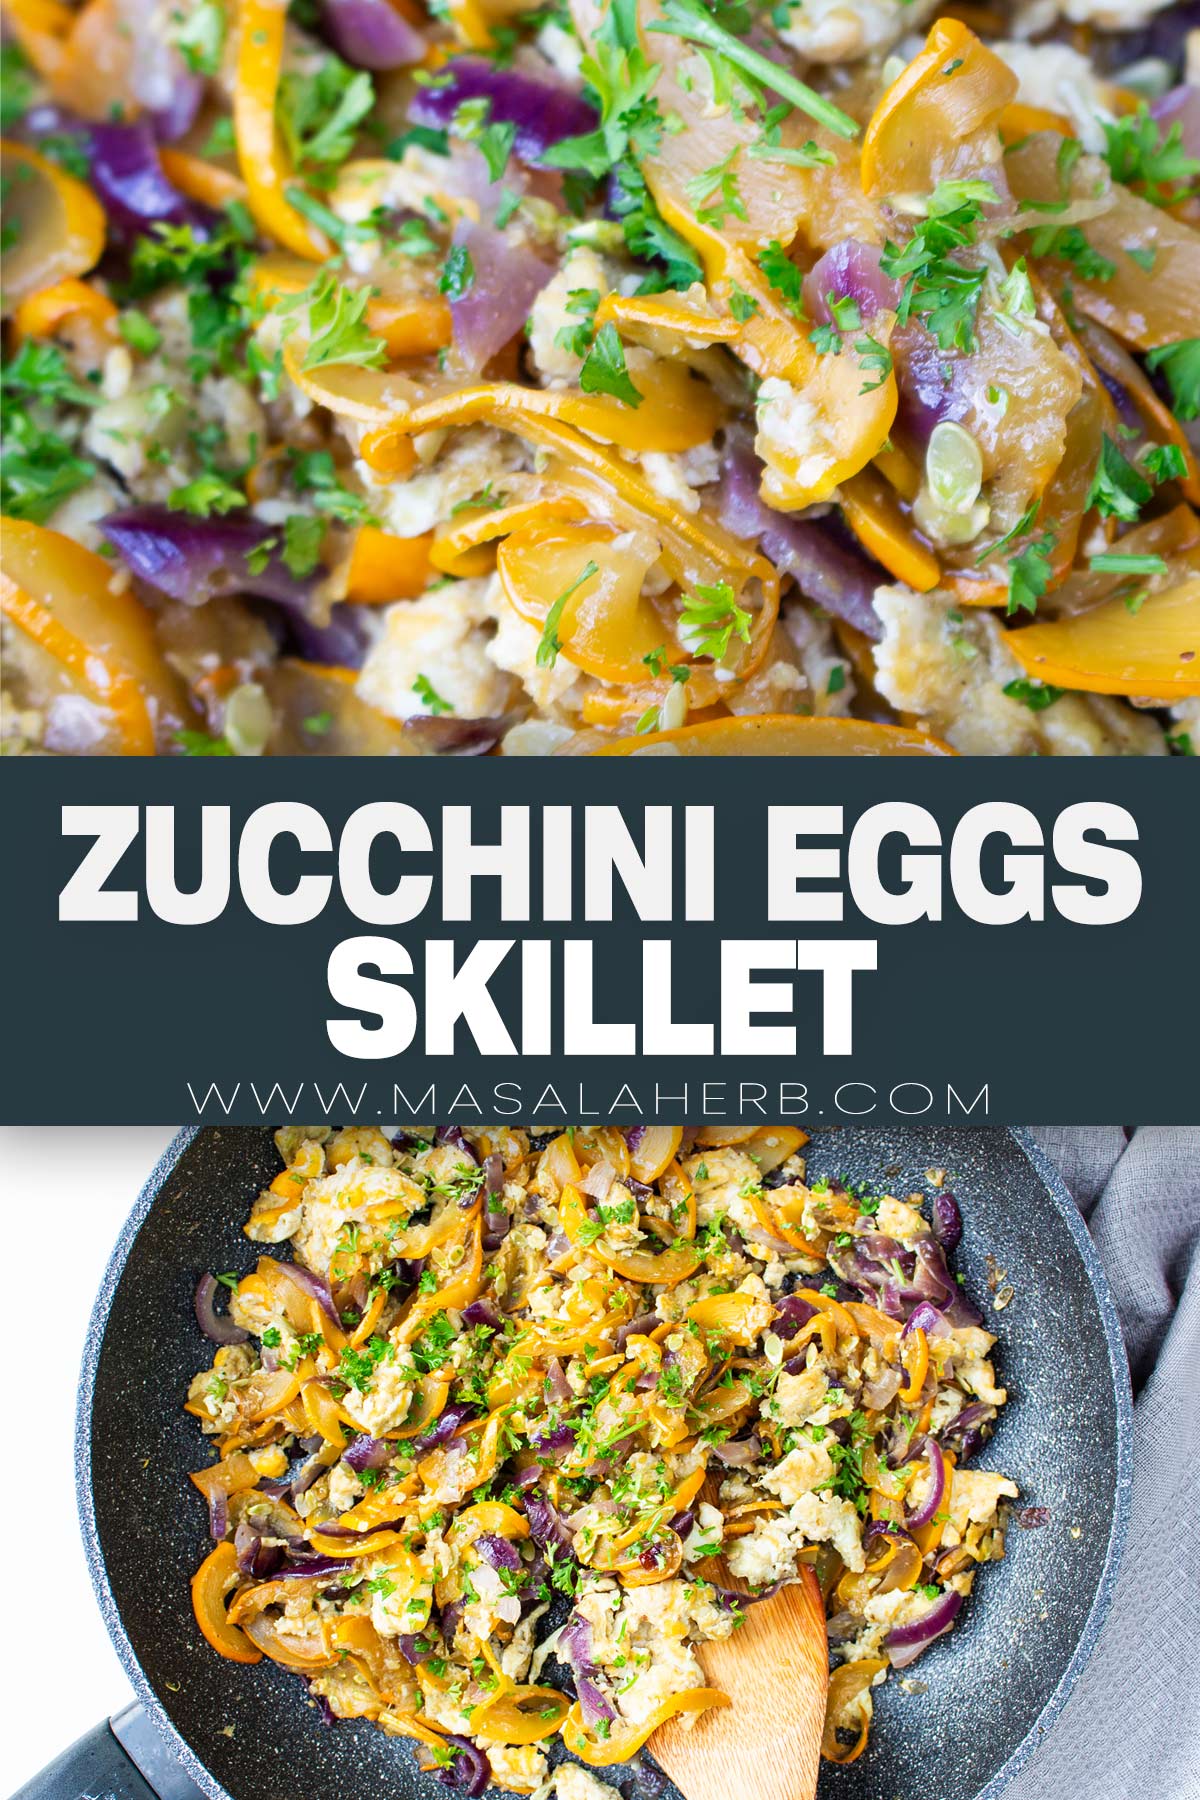 Zucchini and Eggs Skillet Recipe pin image